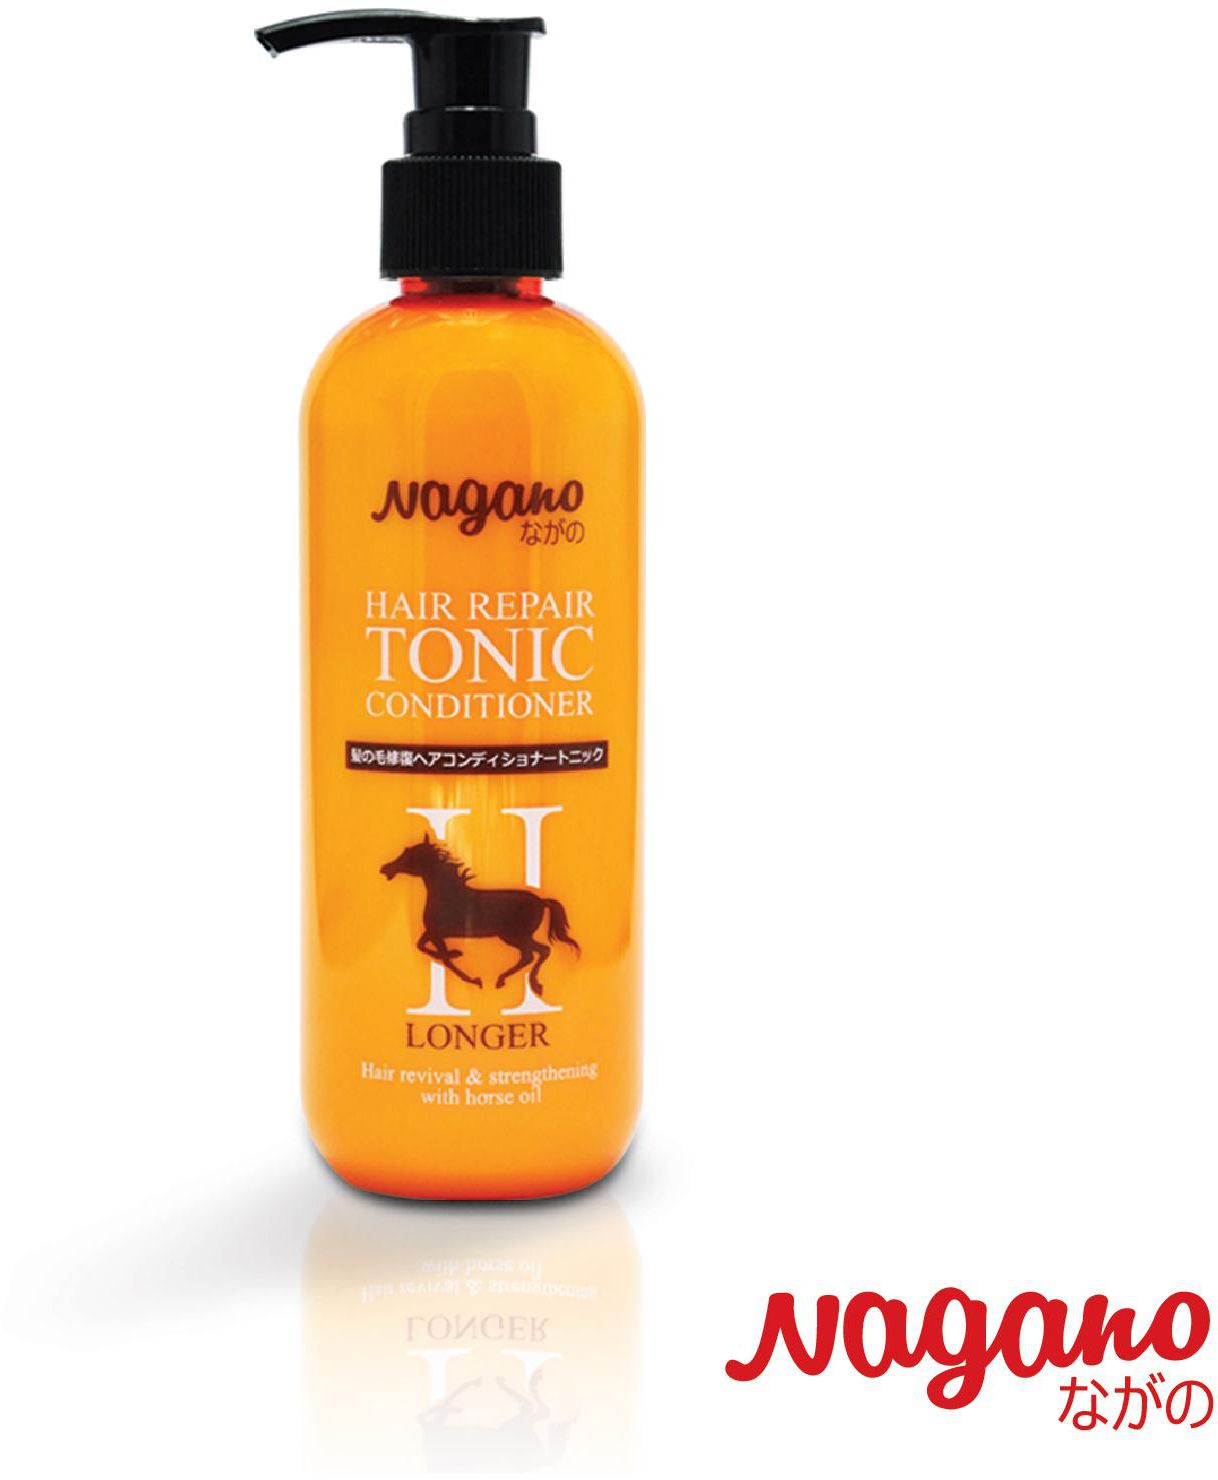 Nagano Hair Repair Tonic Conditioner 250 ml